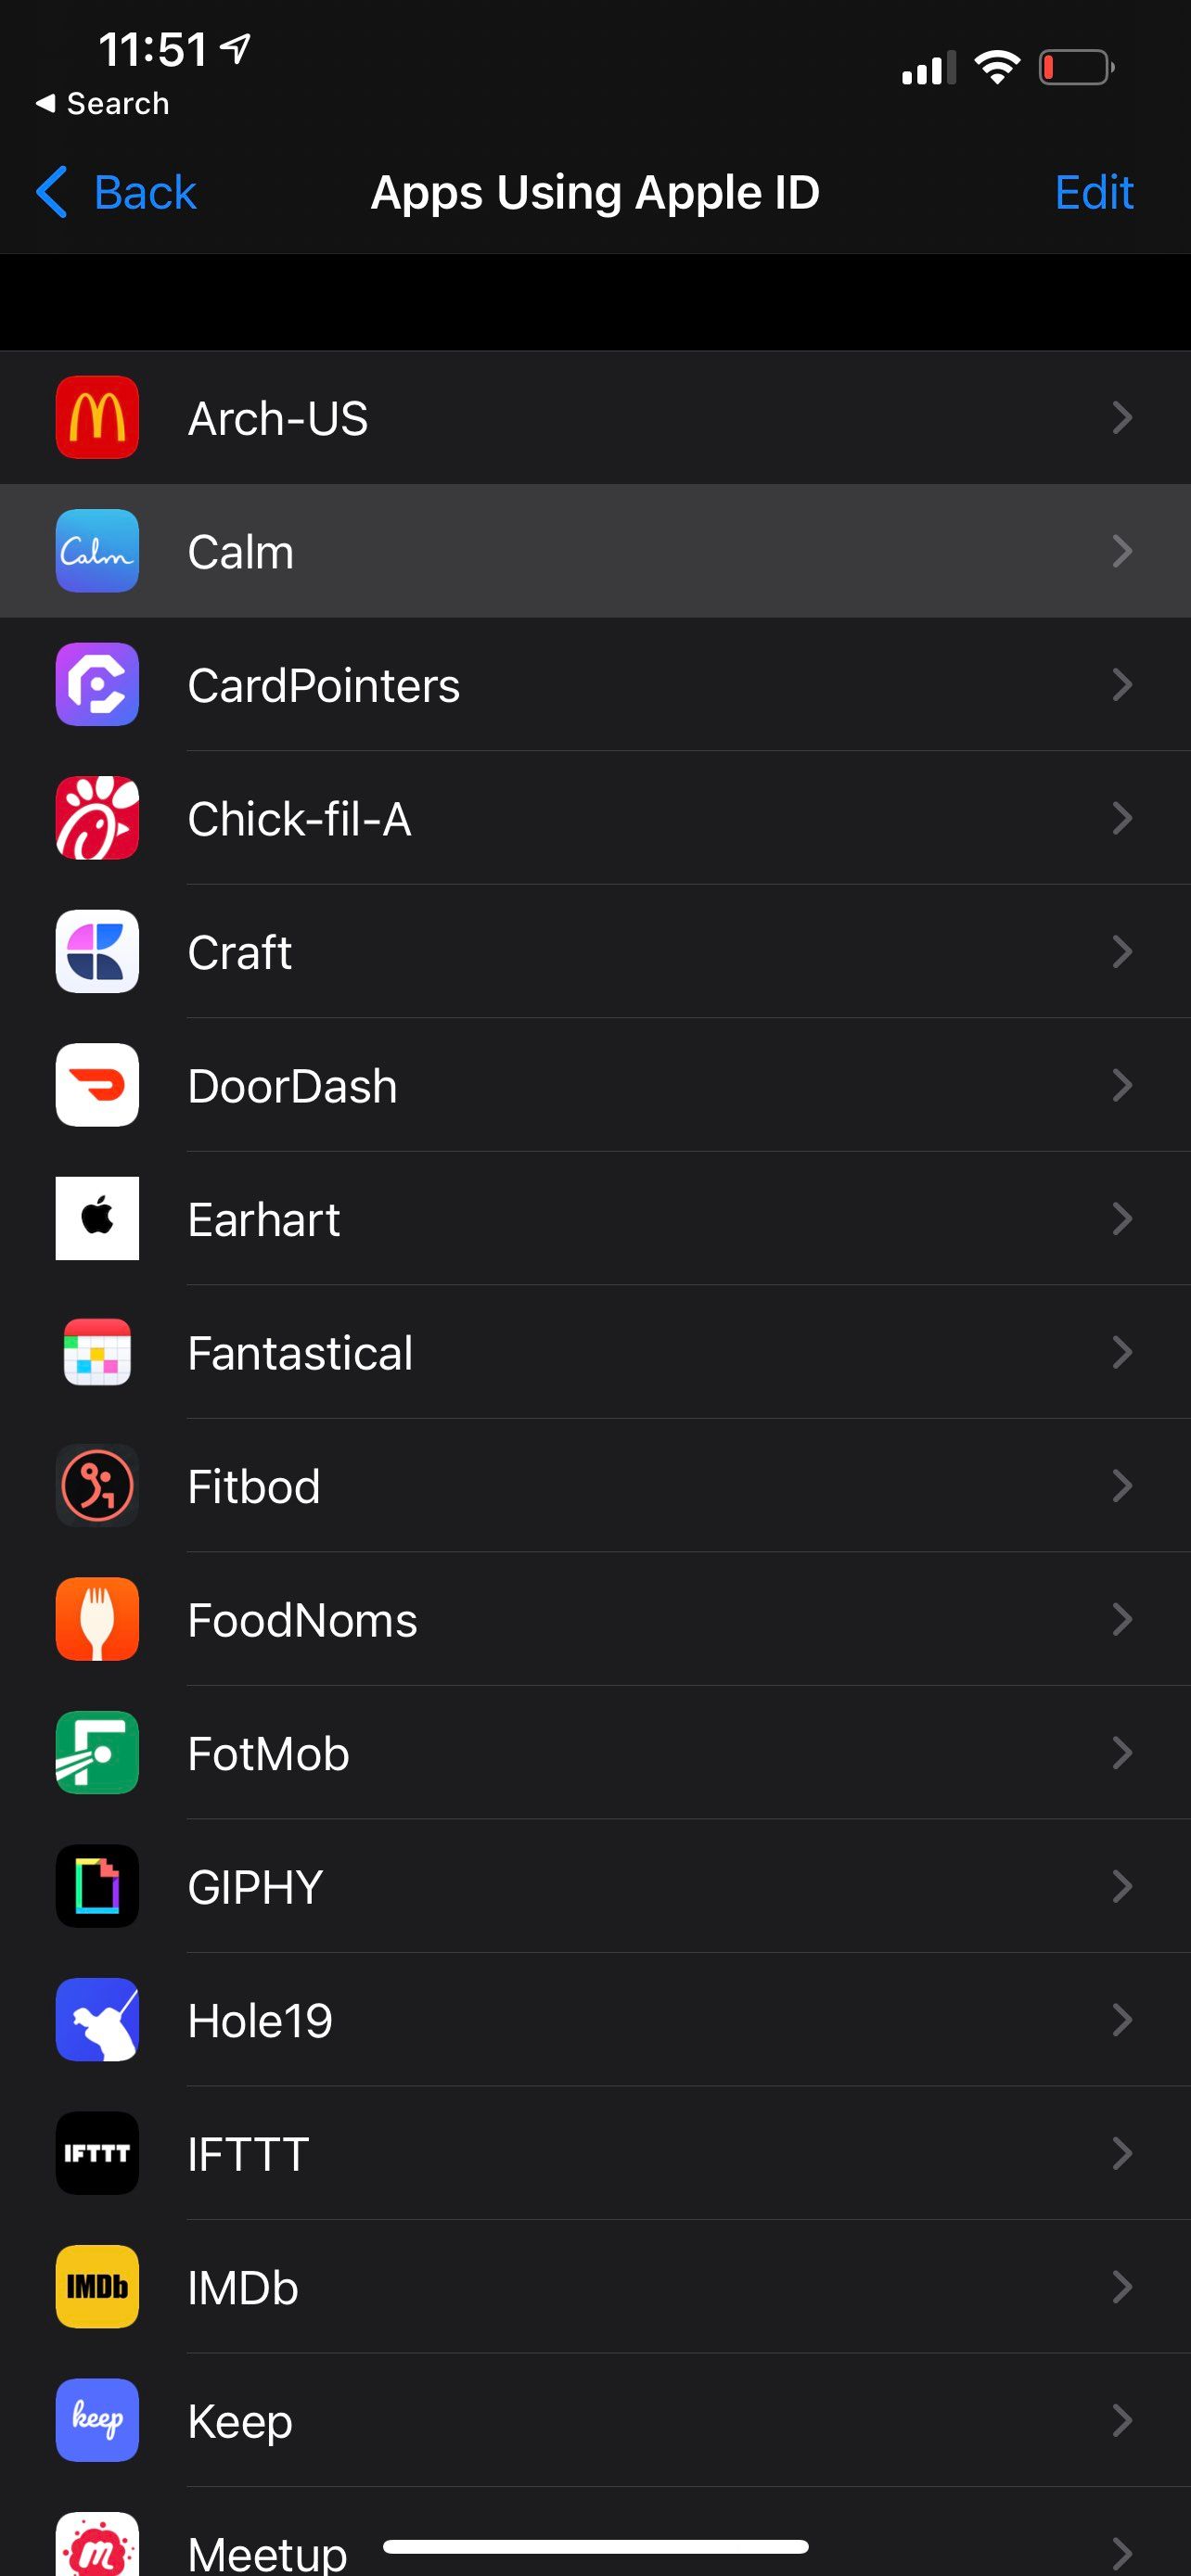 List of apps using Apple ID